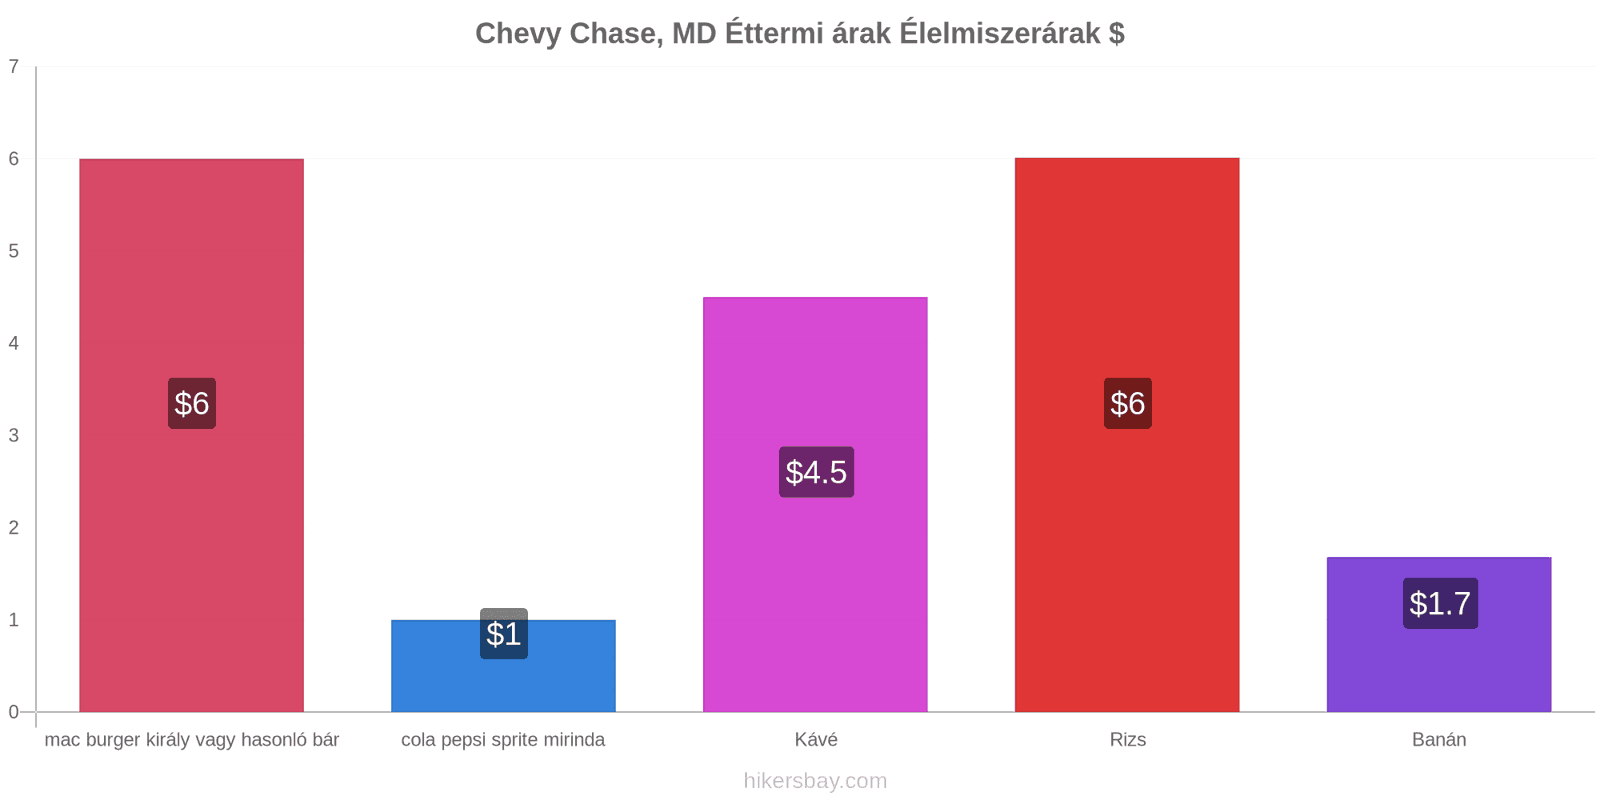 Chevy Chase, MD ár változások hikersbay.com